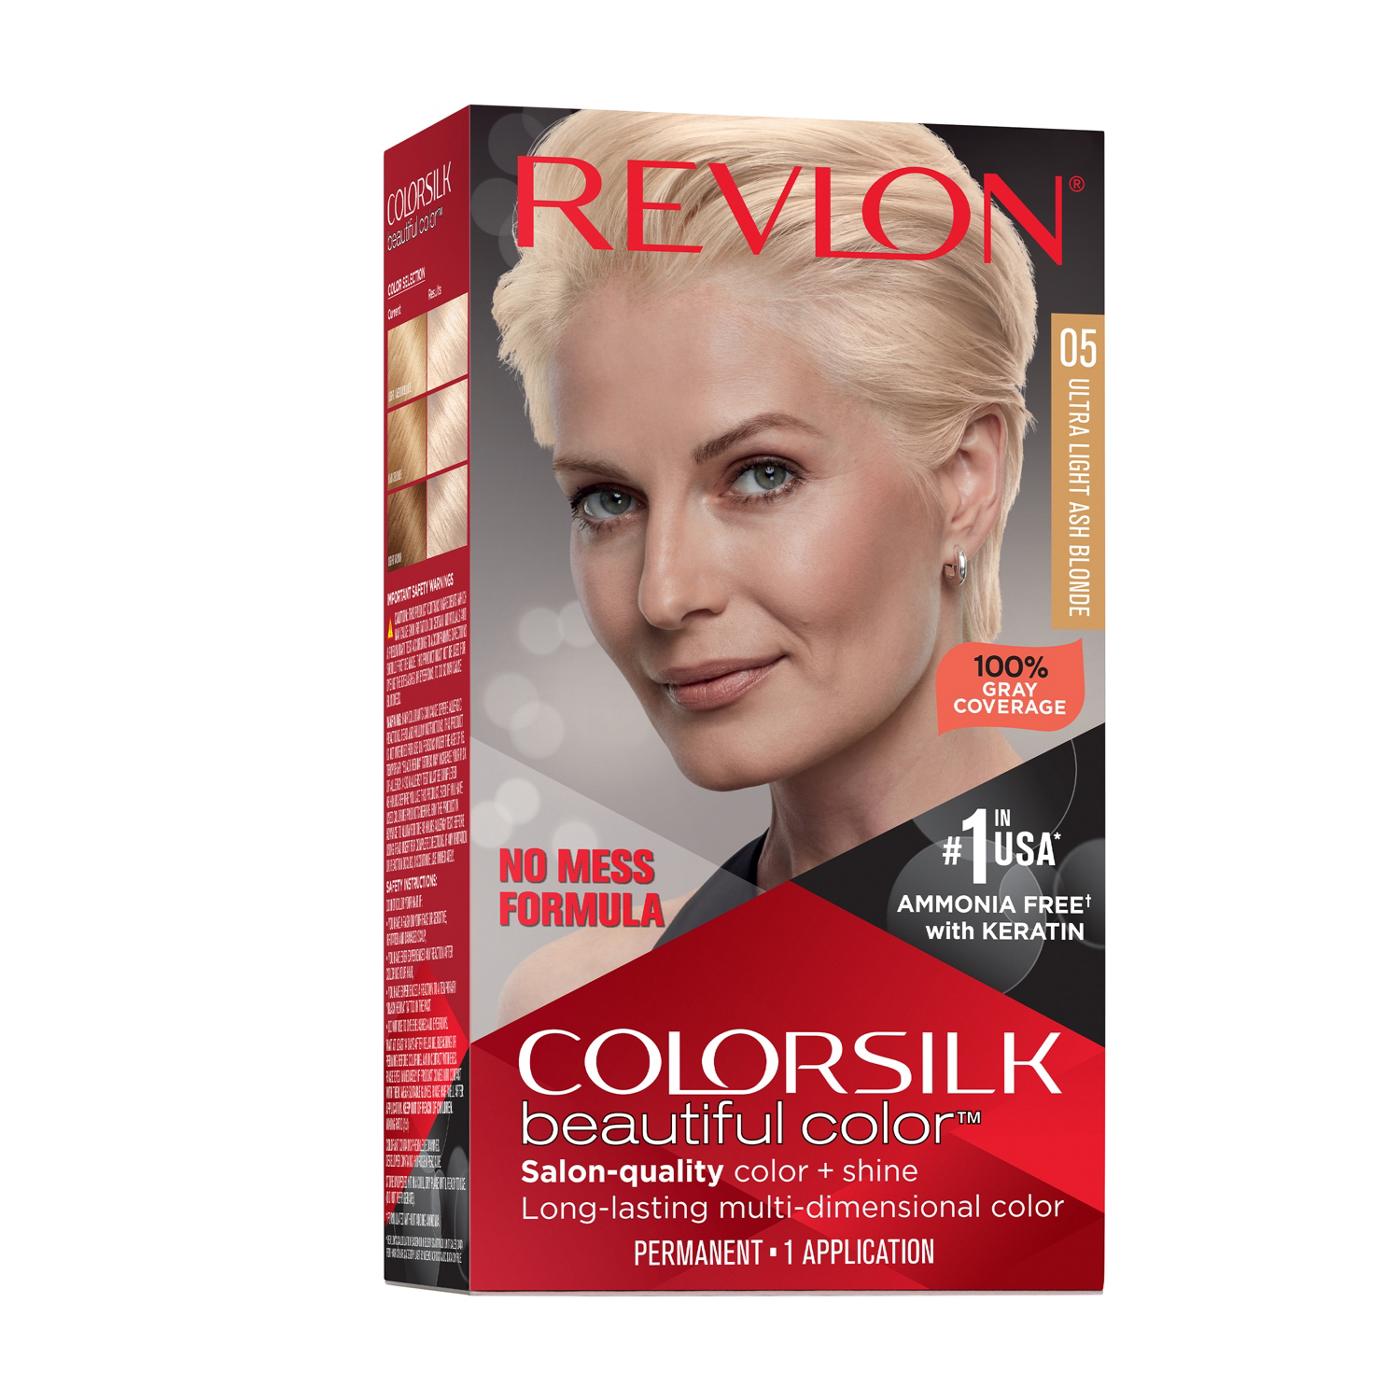 Revlon ColorSilk Hair Color - 05 Ultralight Ash Blonde; image 1 of 7